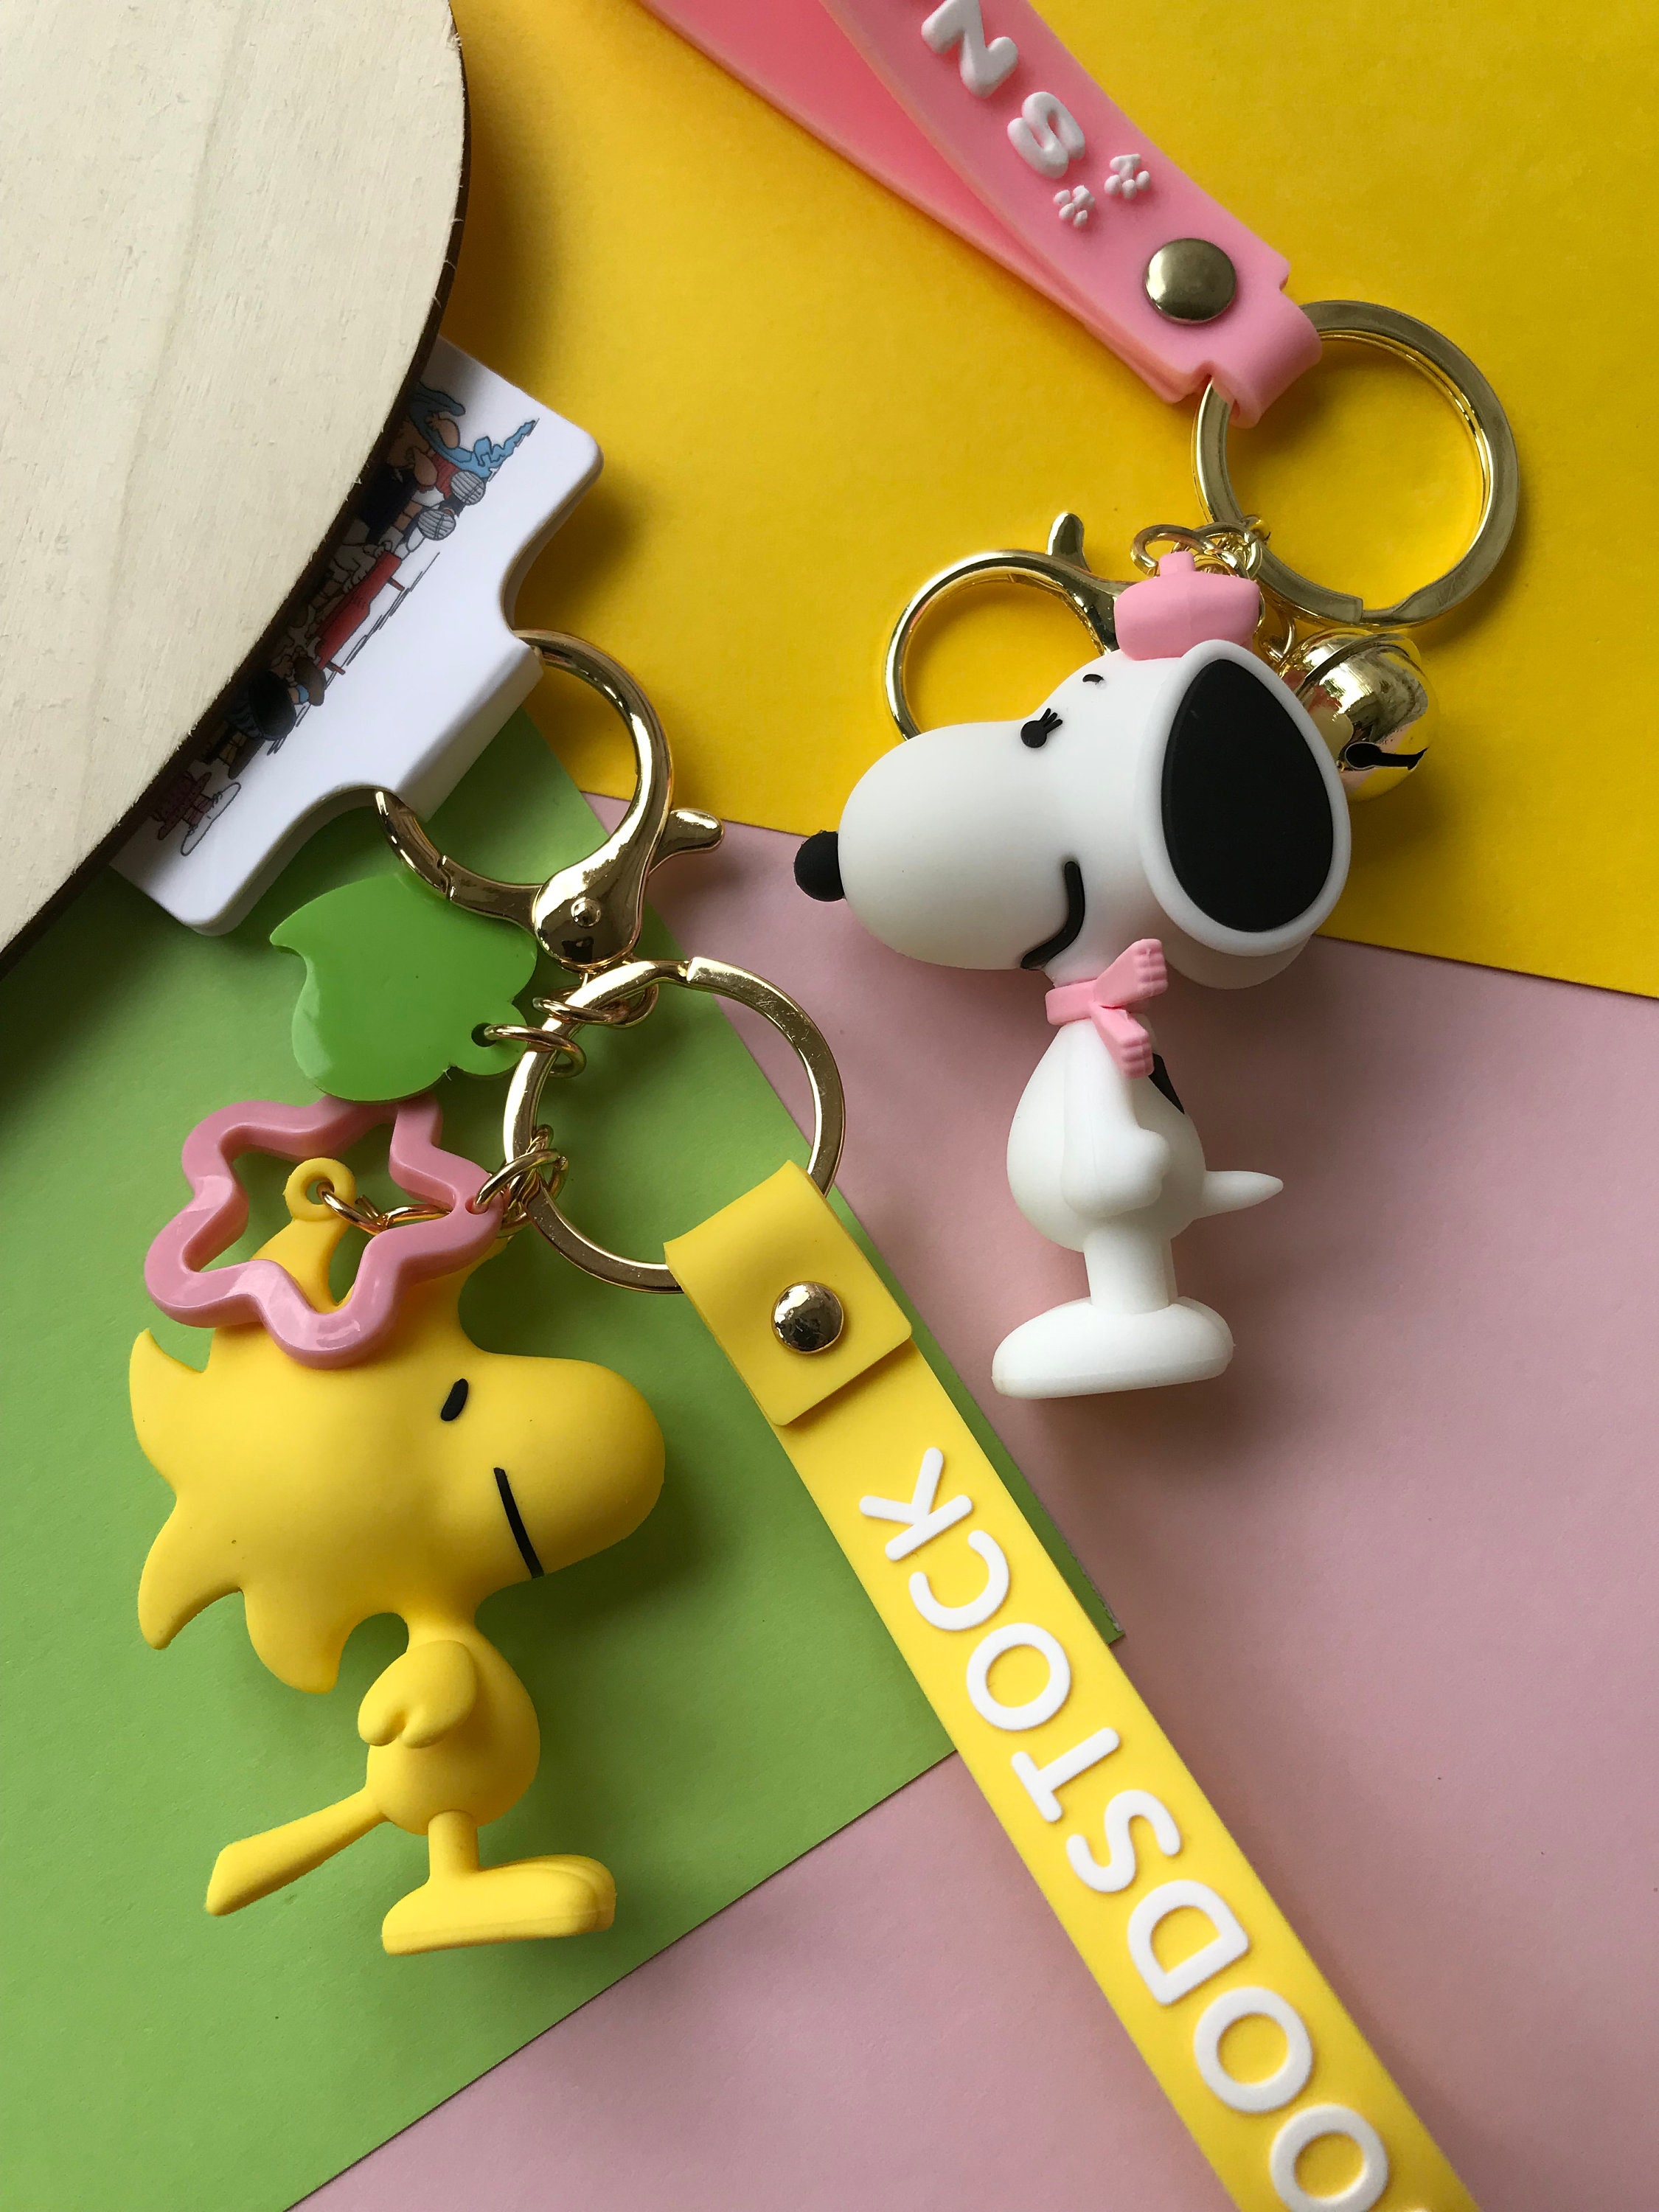 Anime keyring Cartoon Snoopy Friends 3D Peanuts Keychain Bag Purse Charm  Keyring